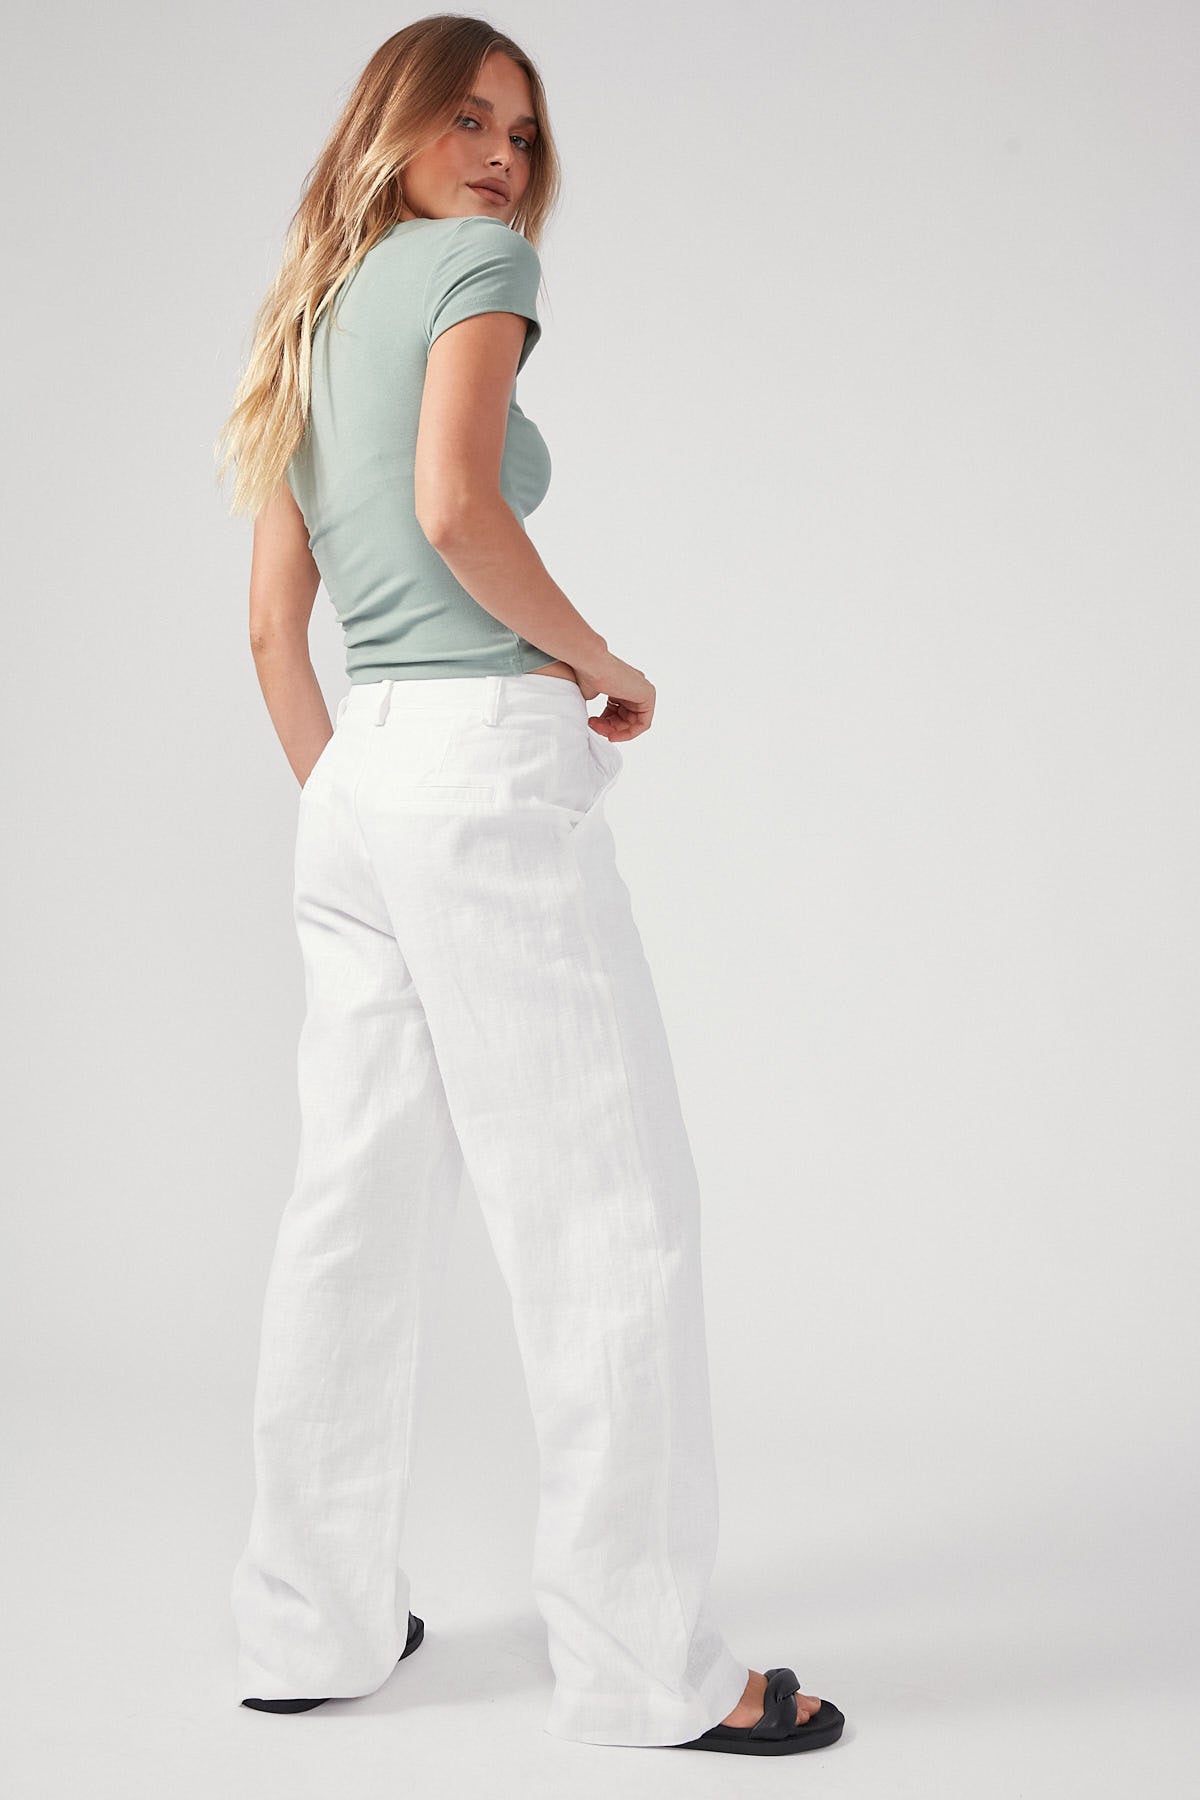 Perfect Stranger Tailored Linen Pant White